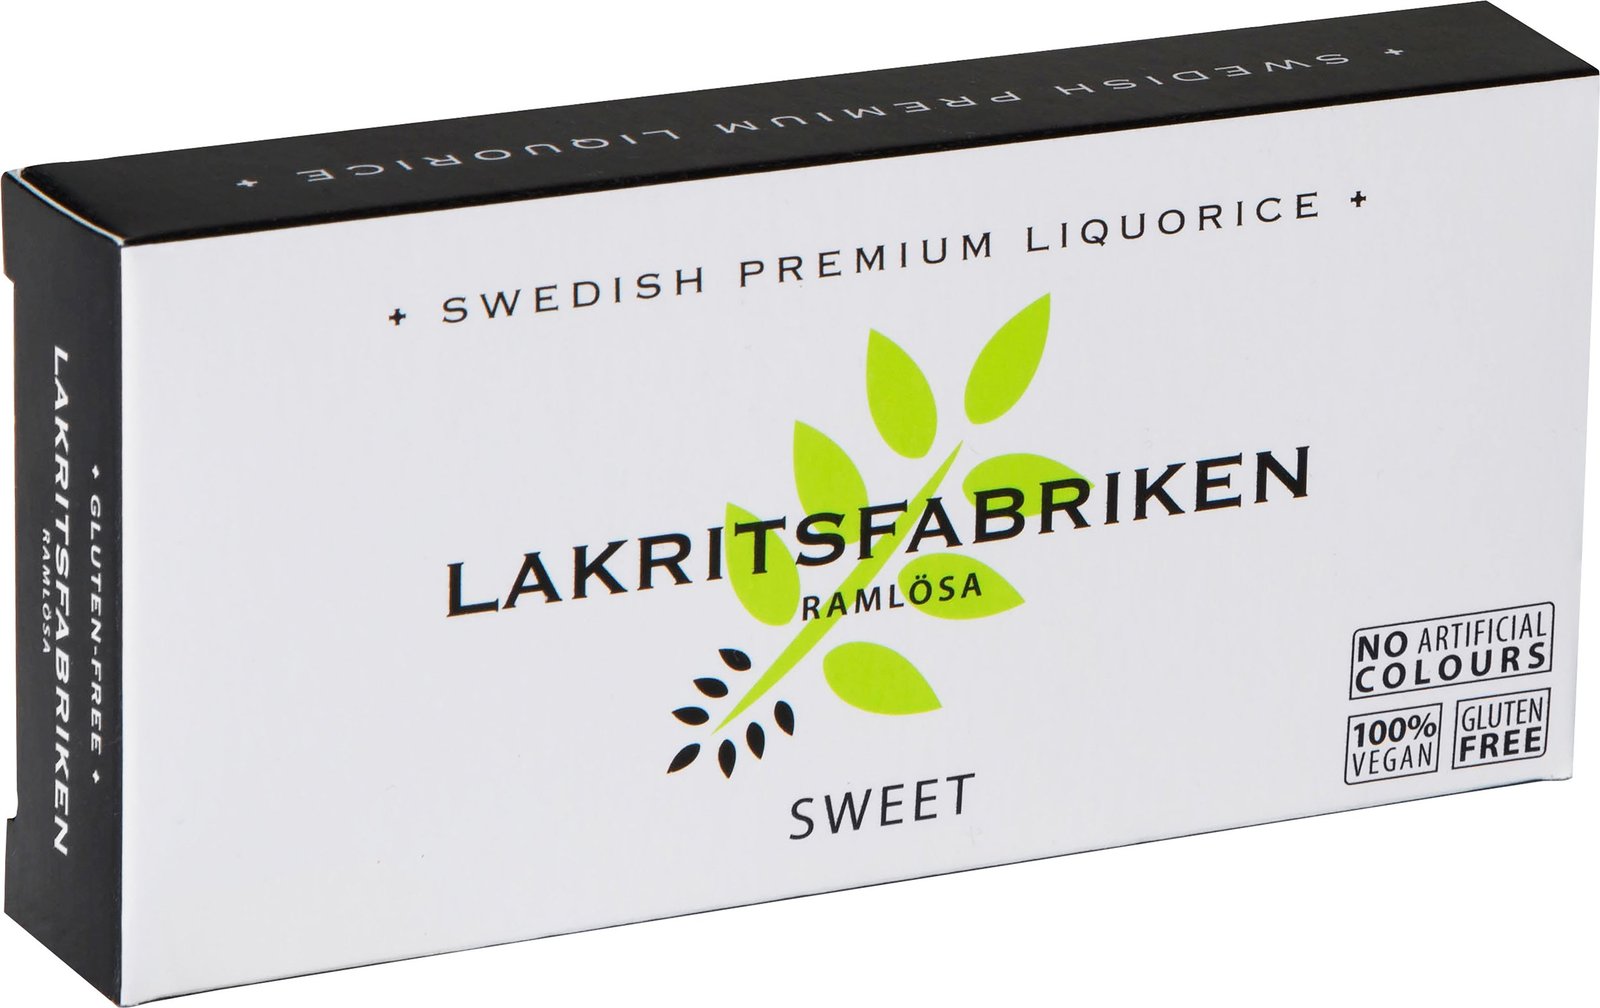 Lakritsfabriken Premium Liquorice Sweet 40 g